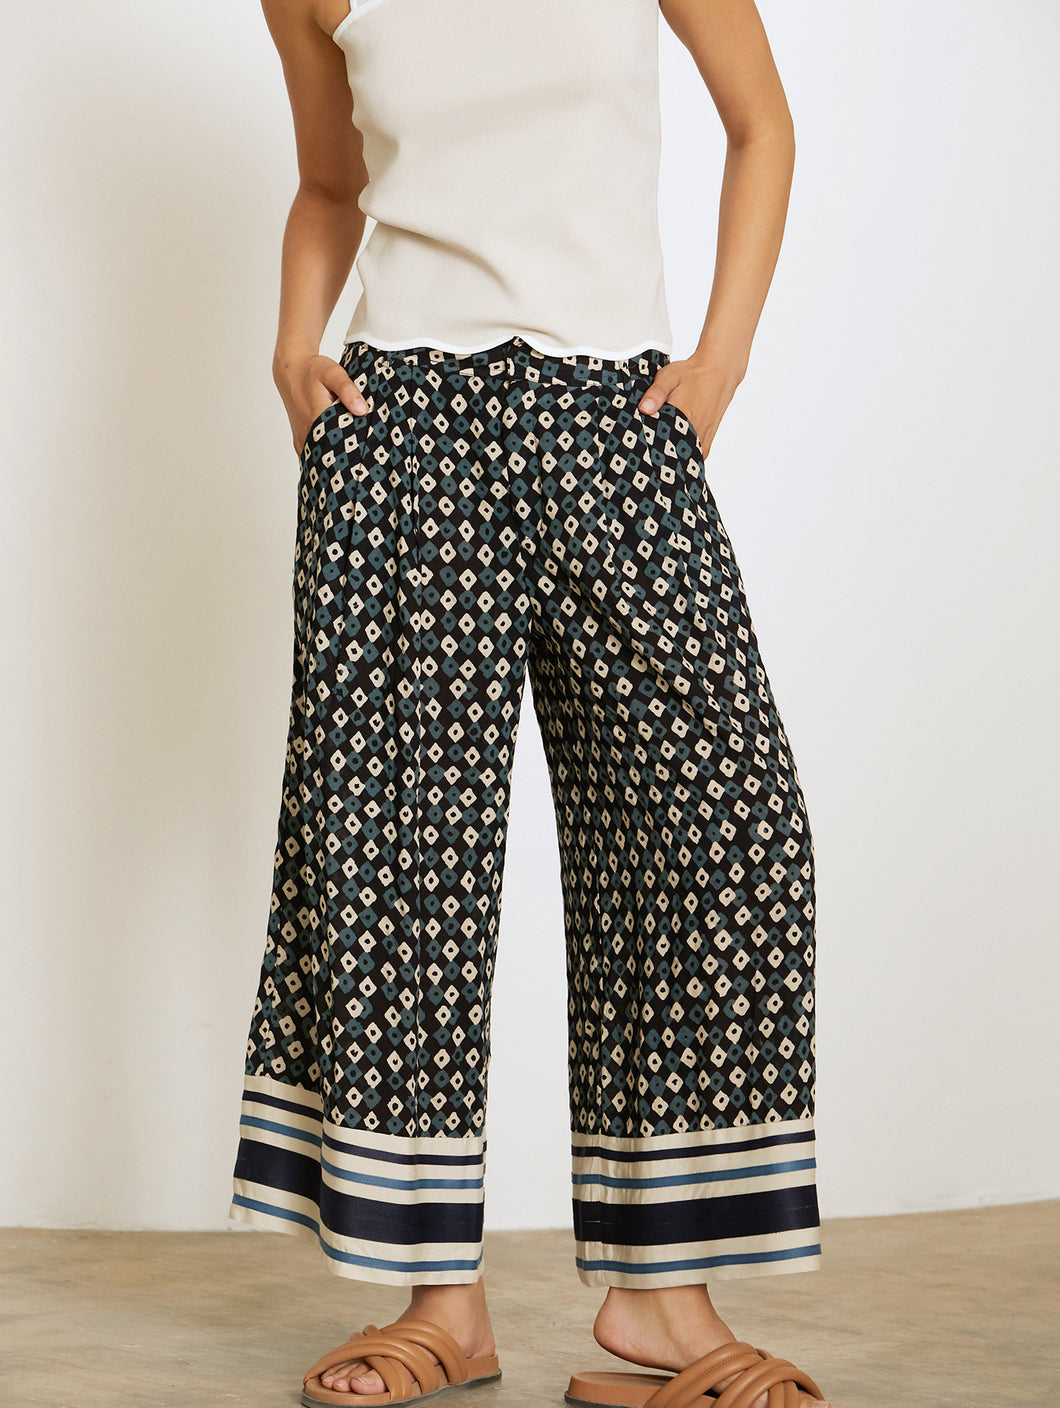 Skatïe Diamond graphic trouser with contrast stripe cuff detail Navy